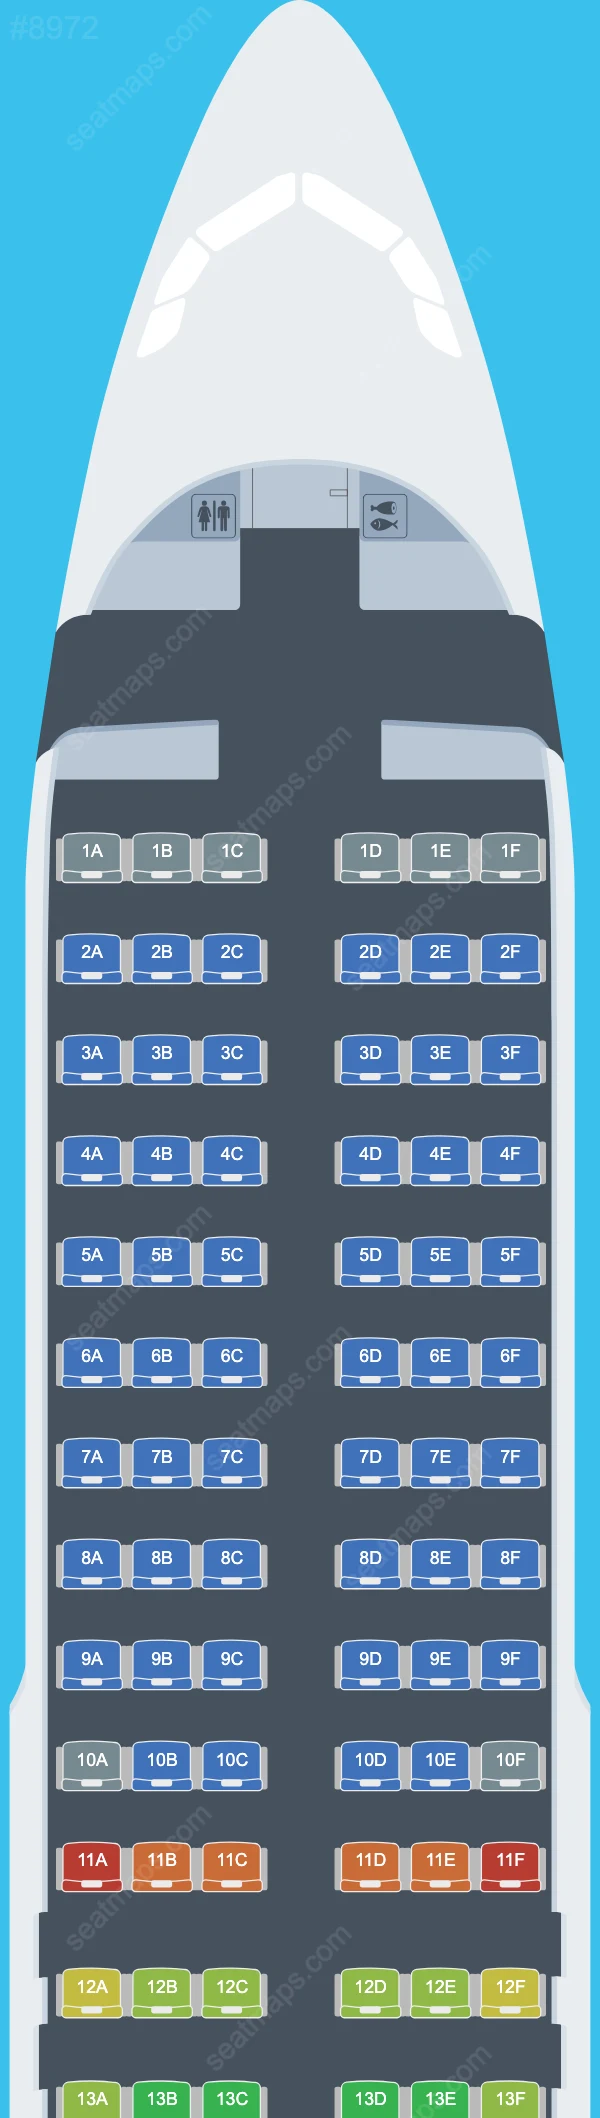 SalamAir Airbus A320 Seat Maps A320-200neo